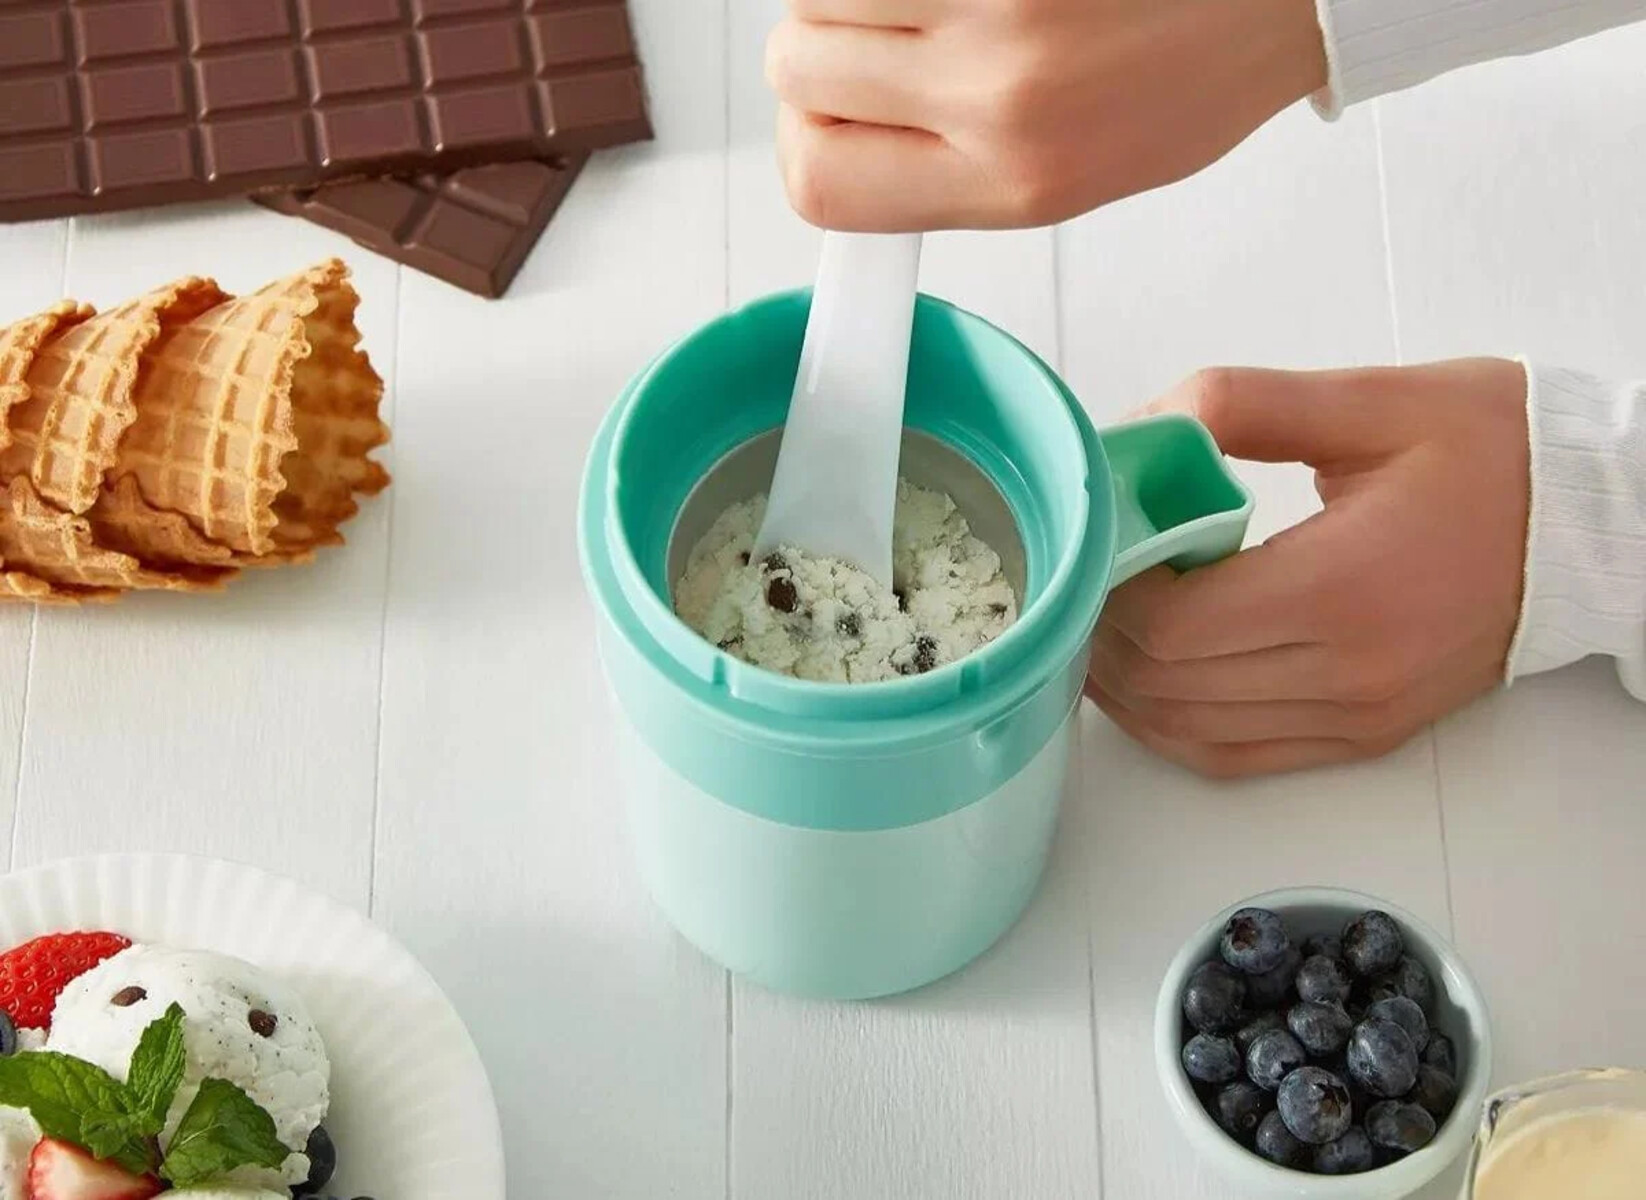 Dash My Mug Ice Cream Maker Bundle 2 Freezer Individual Bowls Pint Size